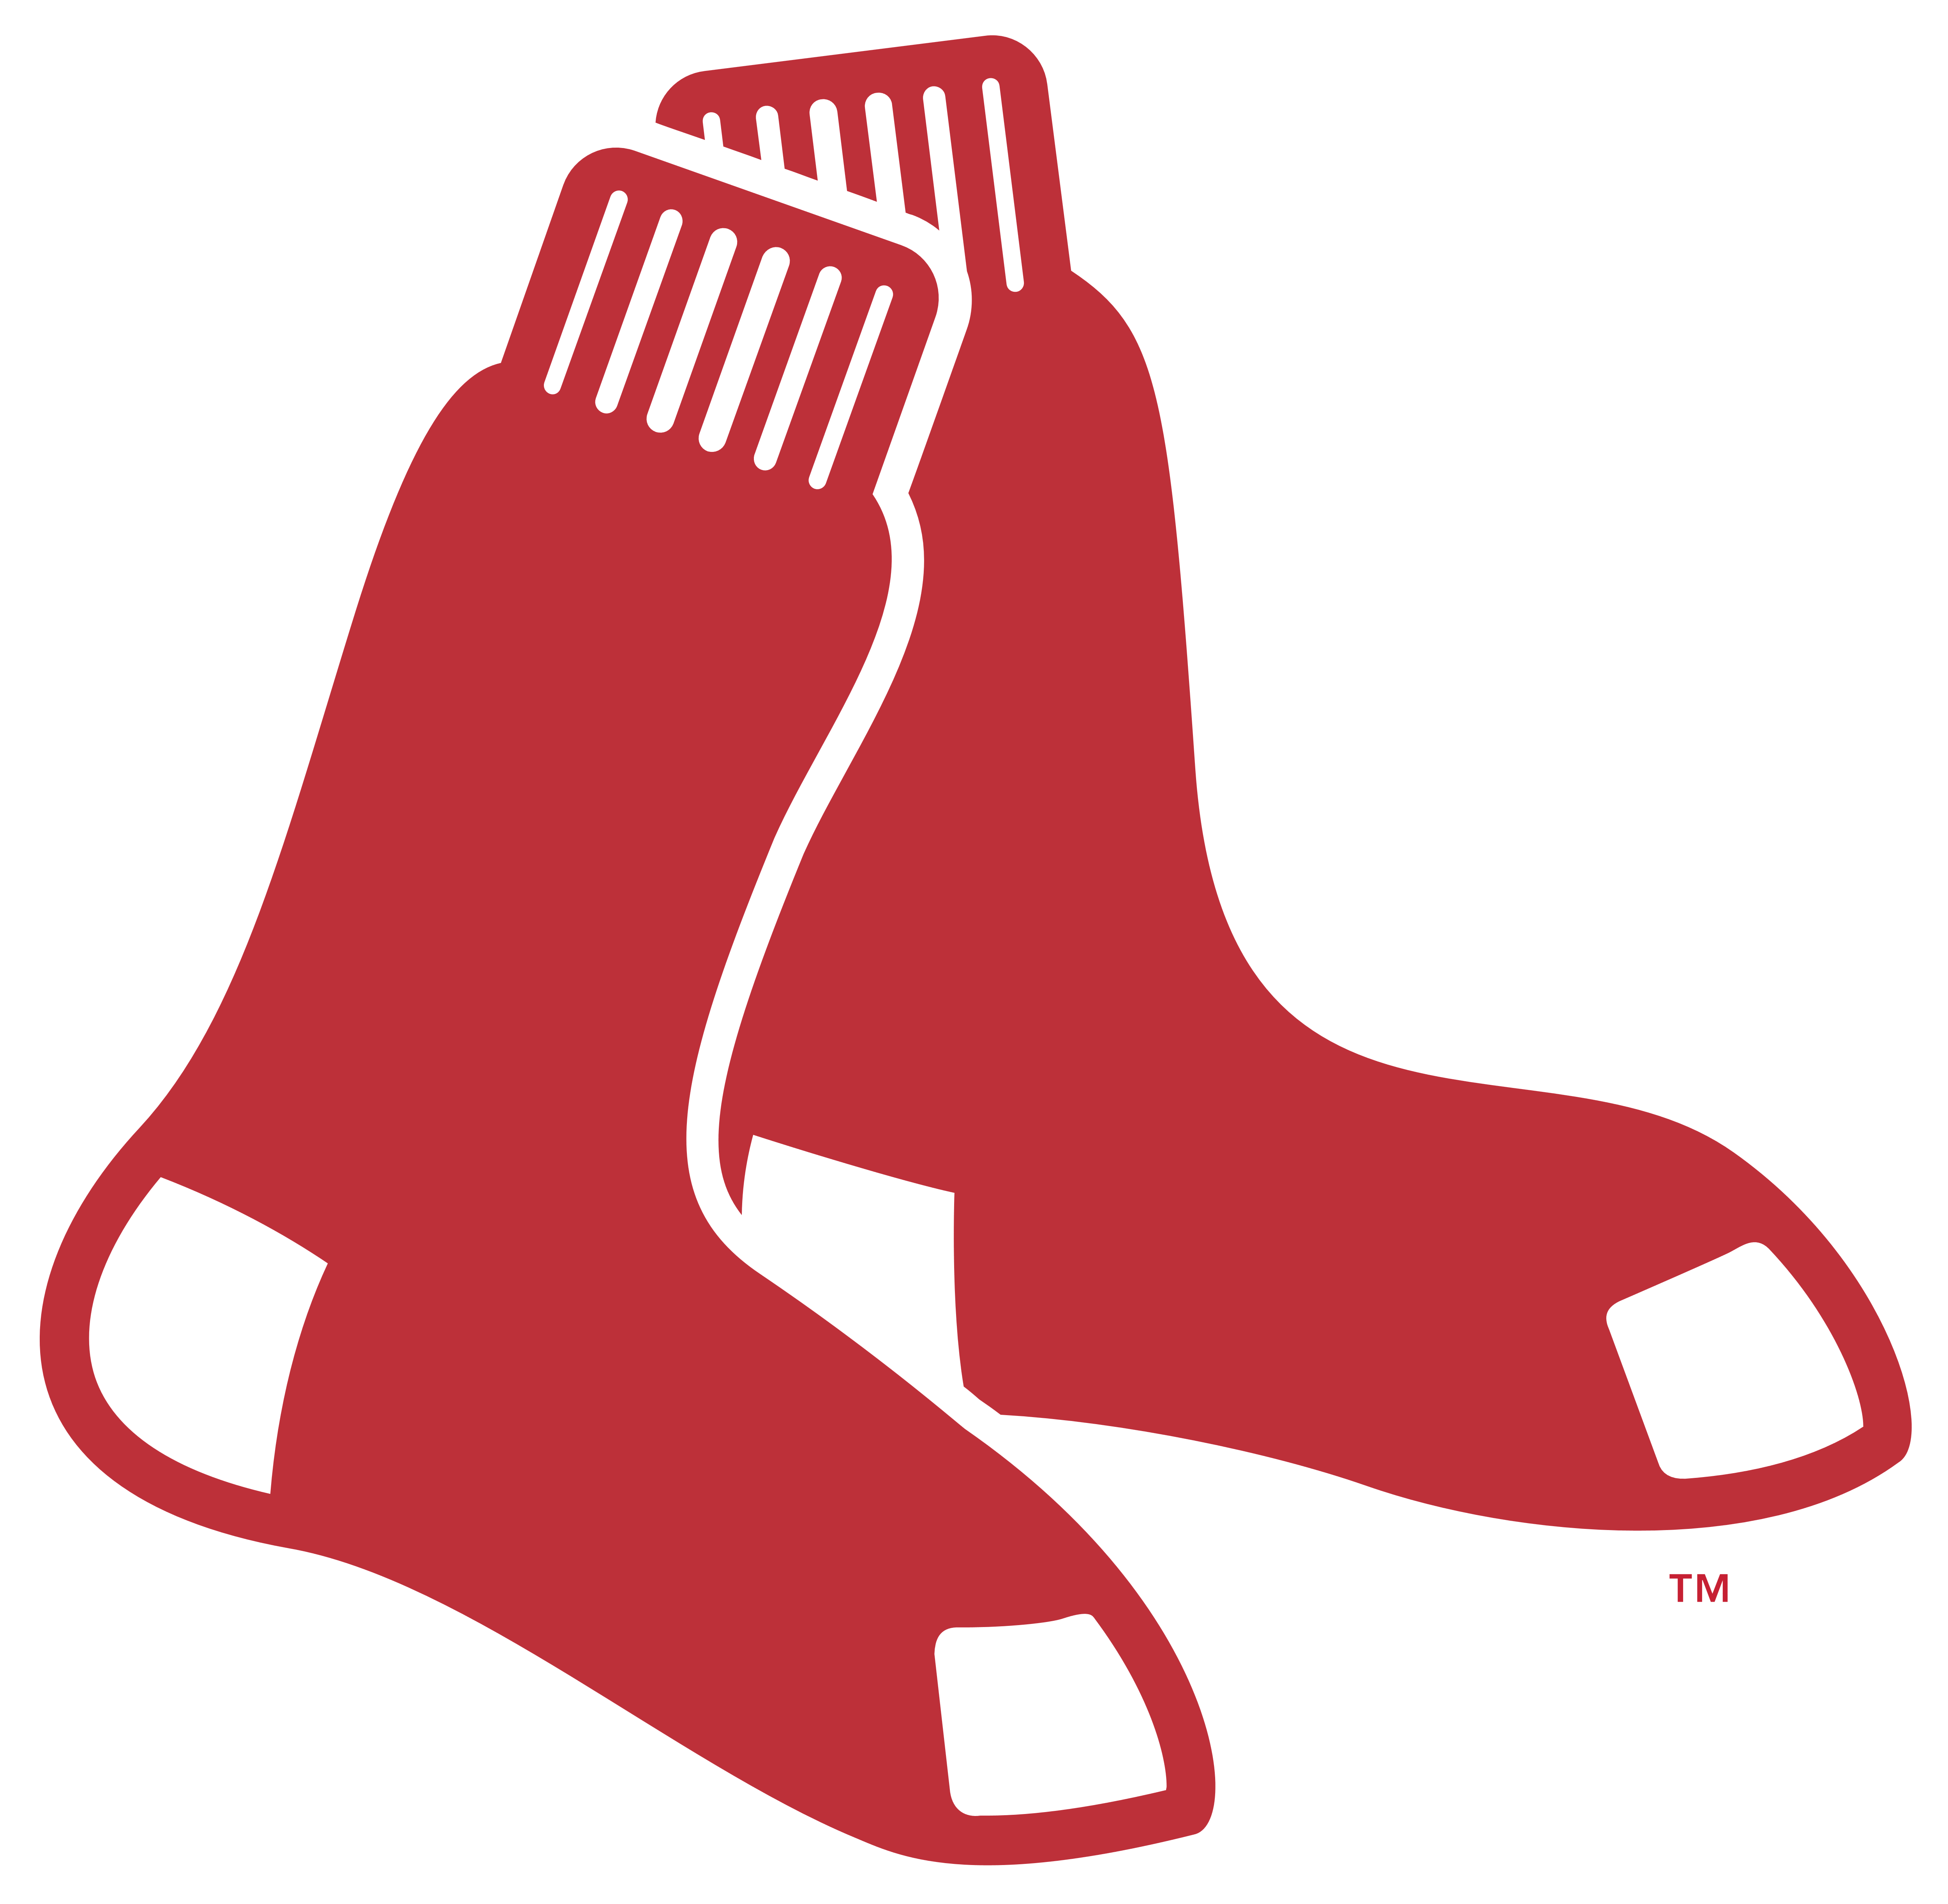 Boston Red Soxs Team History